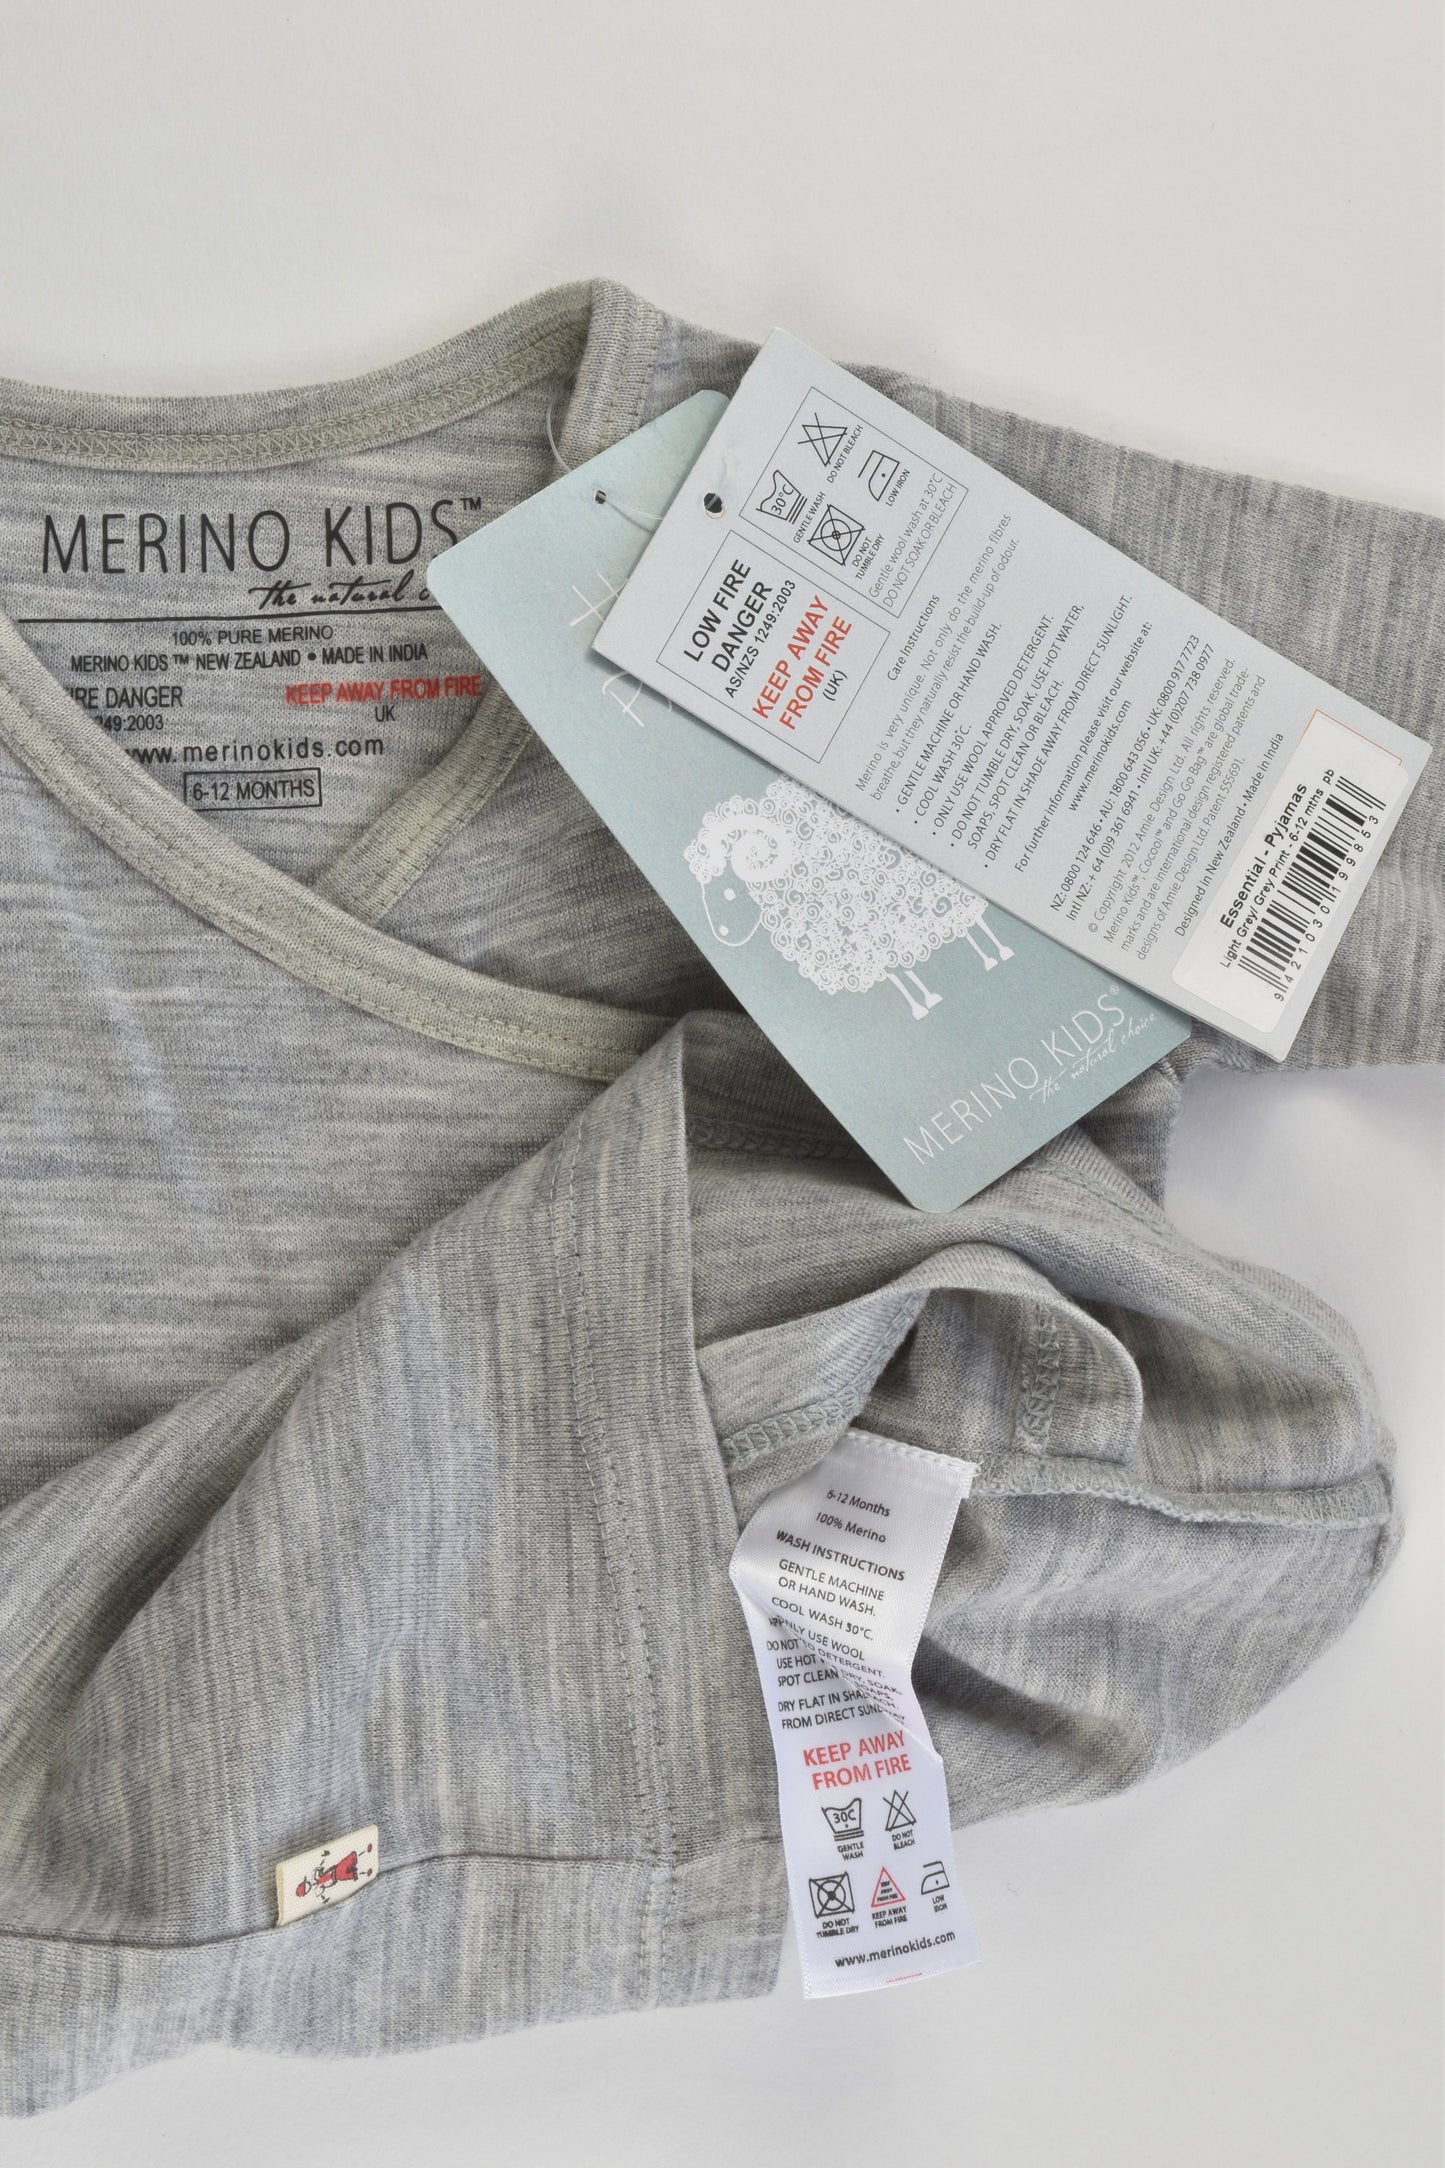 NEW Merino Kids (NZ) Size 0 (6-12 months) Merino Top